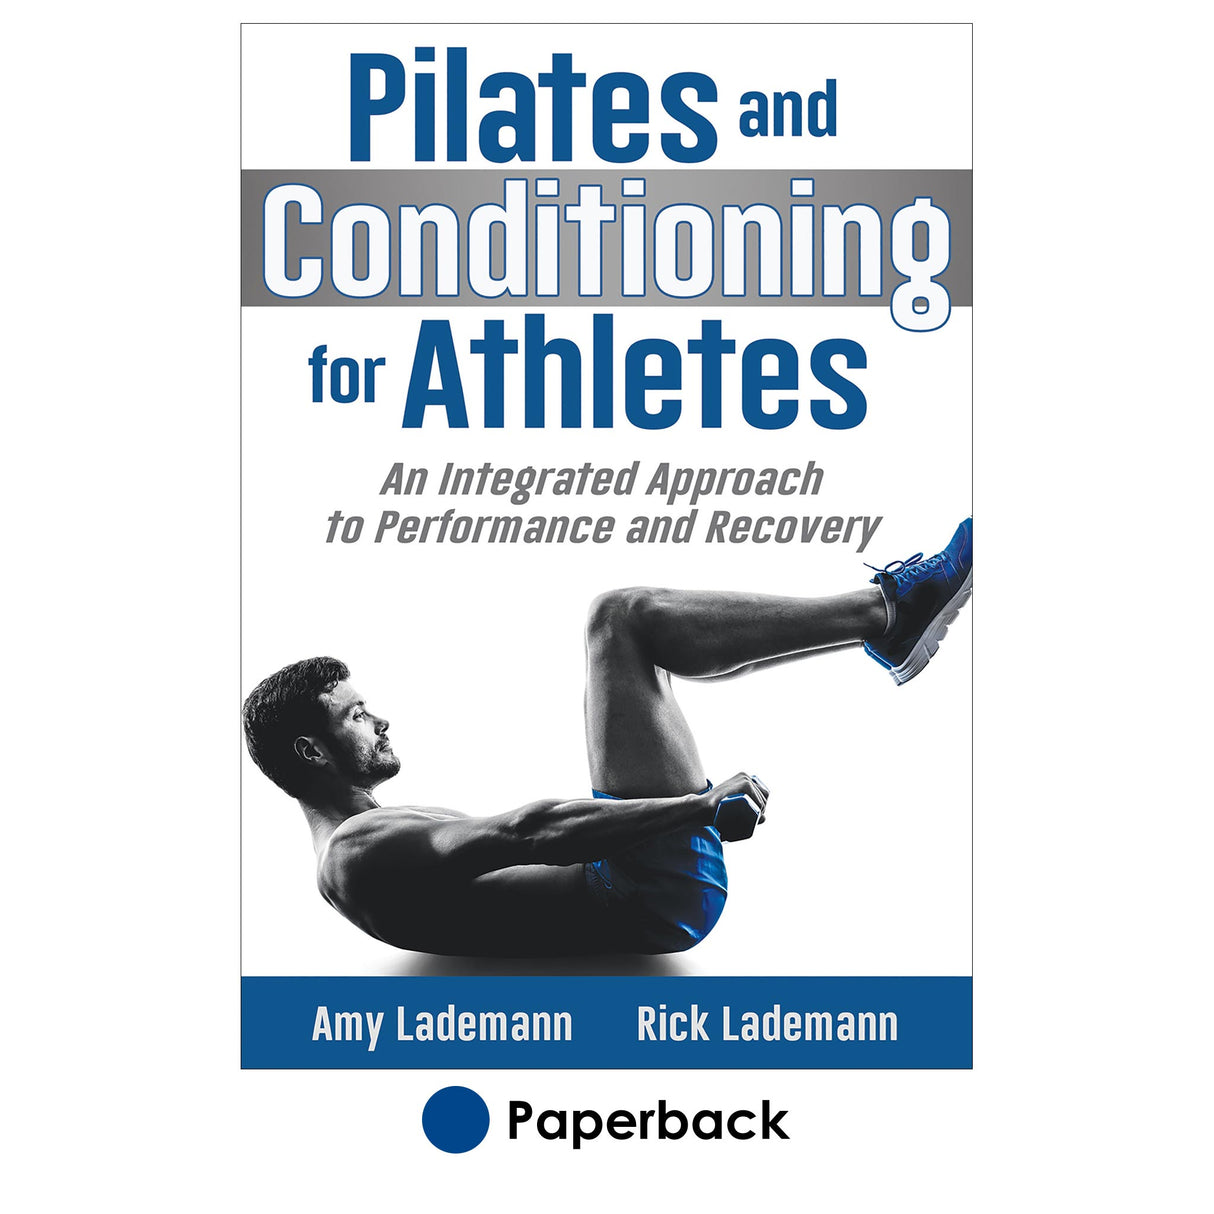 Intermediate Reformer Pilates Teacher Training - Kindle edition by